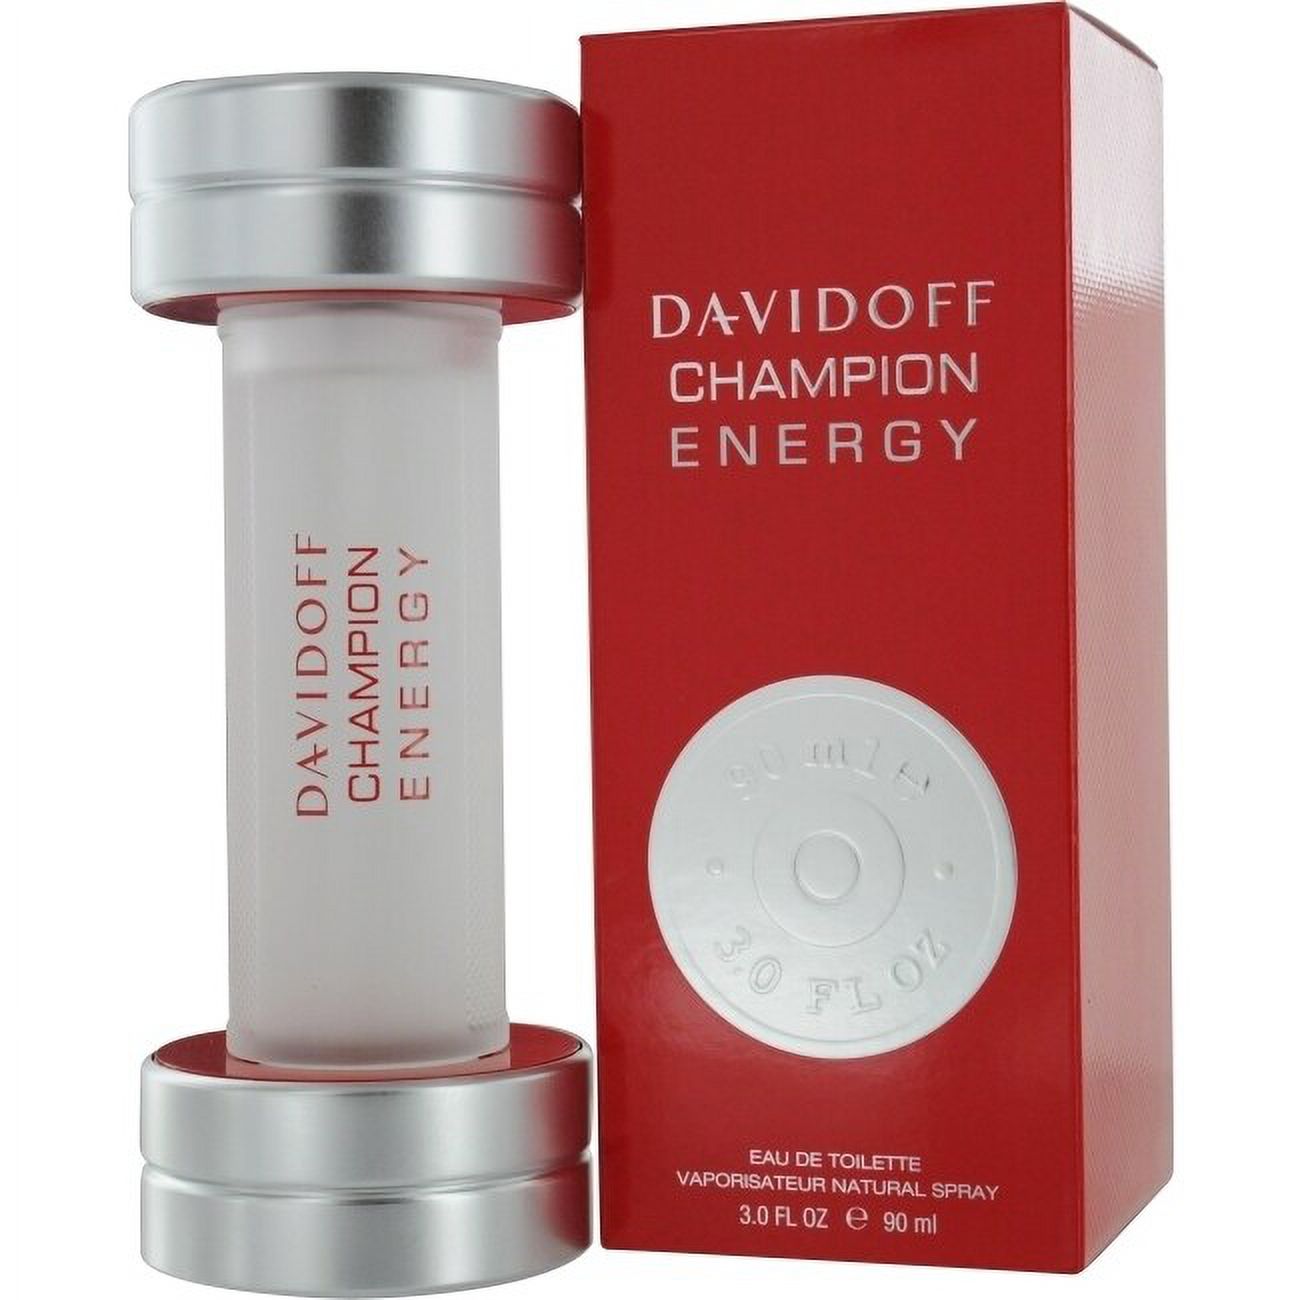 Davidoff Davidoff Champion Energy Eau de toilette Spray For Men 3 oz - image 3 of 5